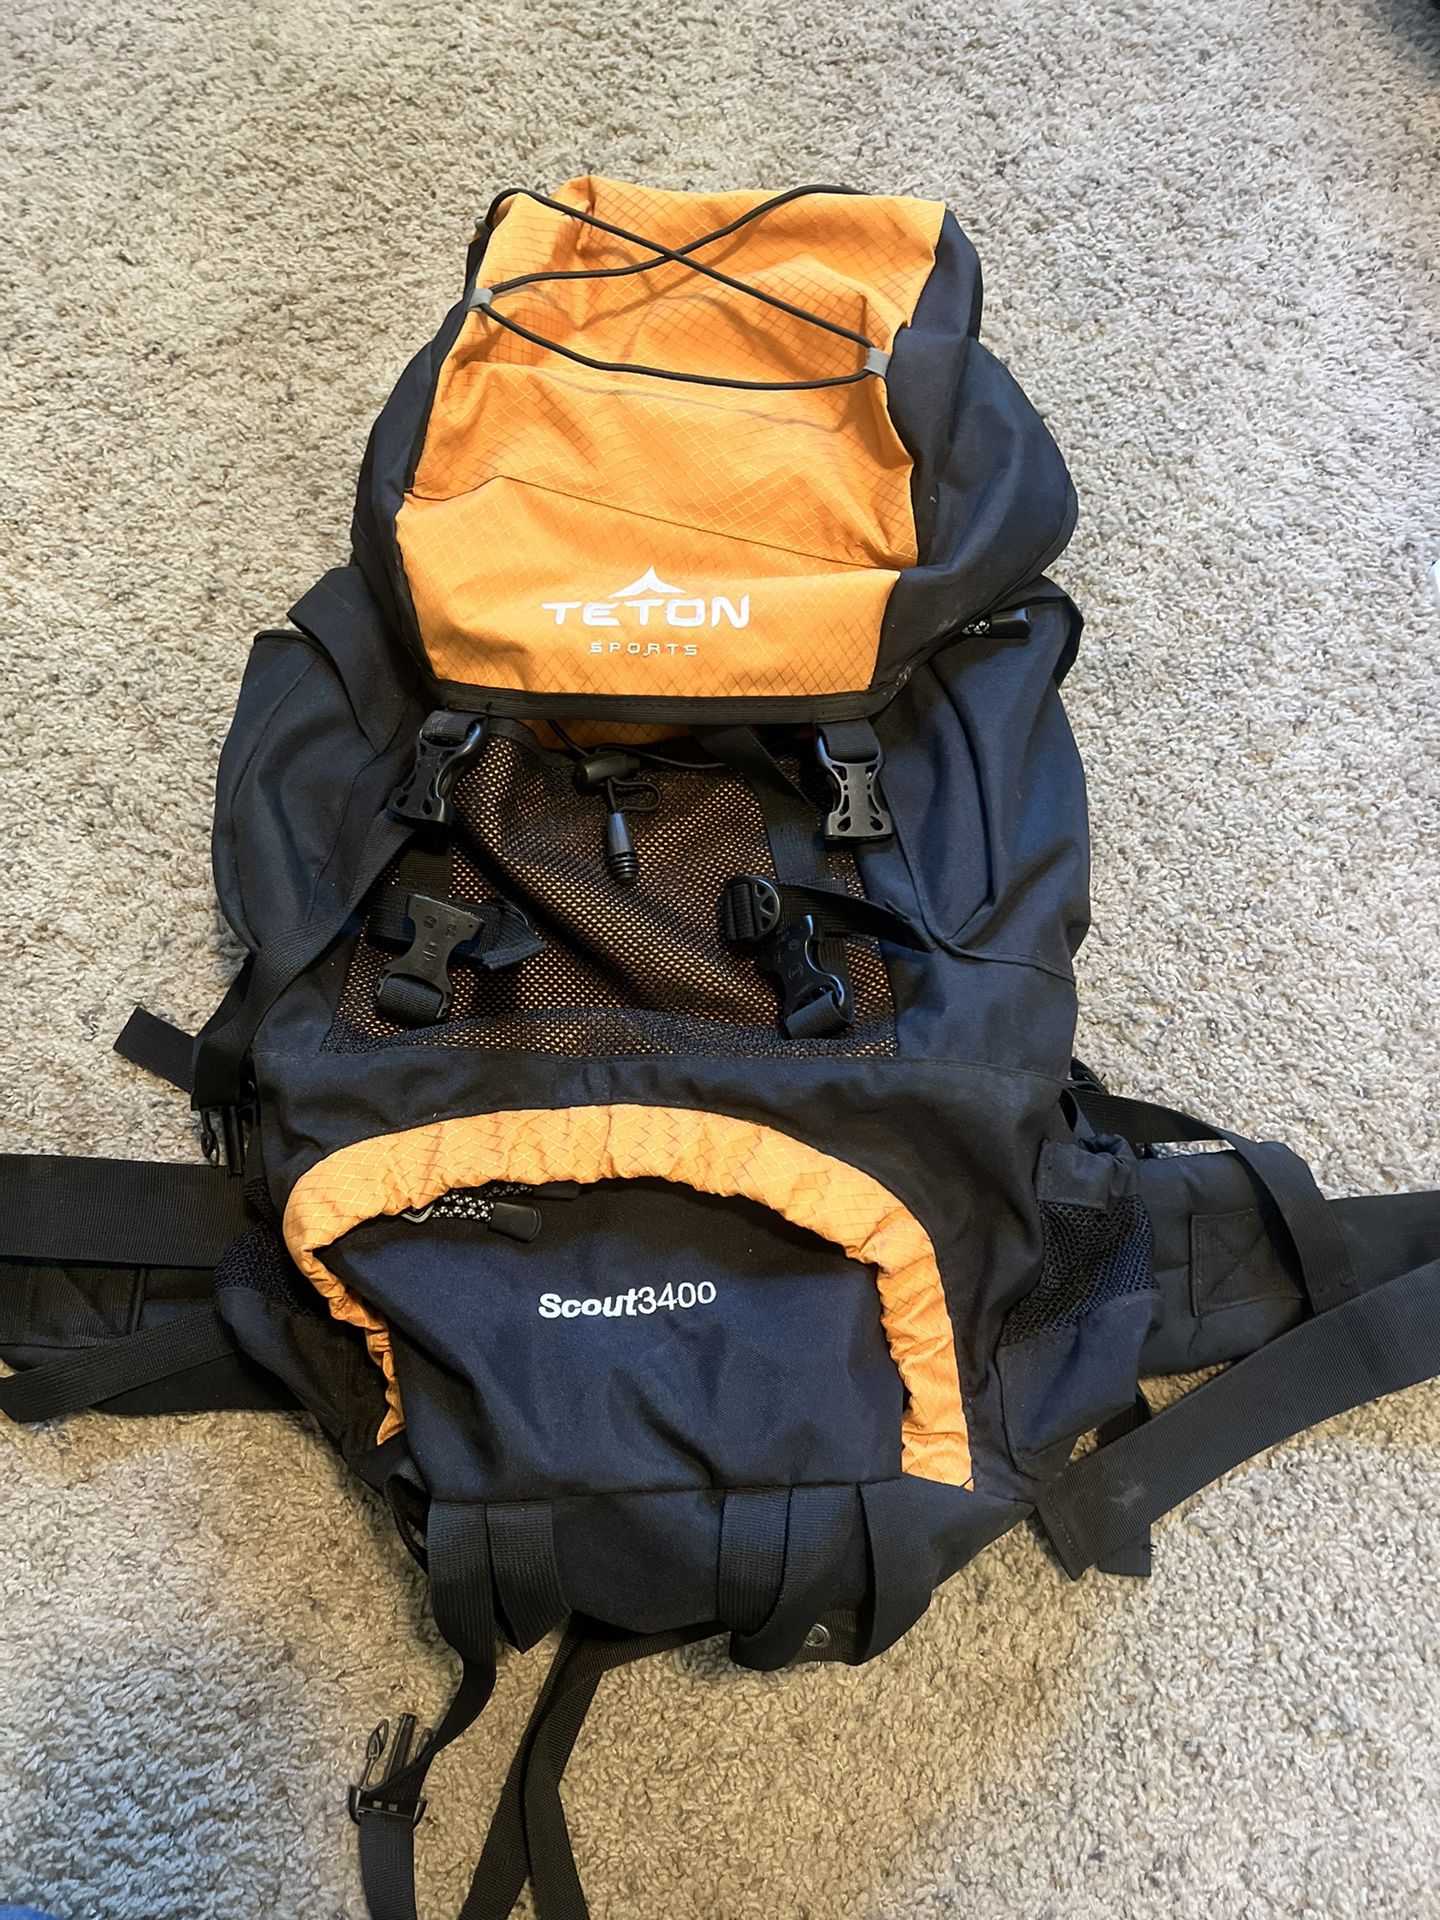 Backpacks $75 Each Or Both For $100